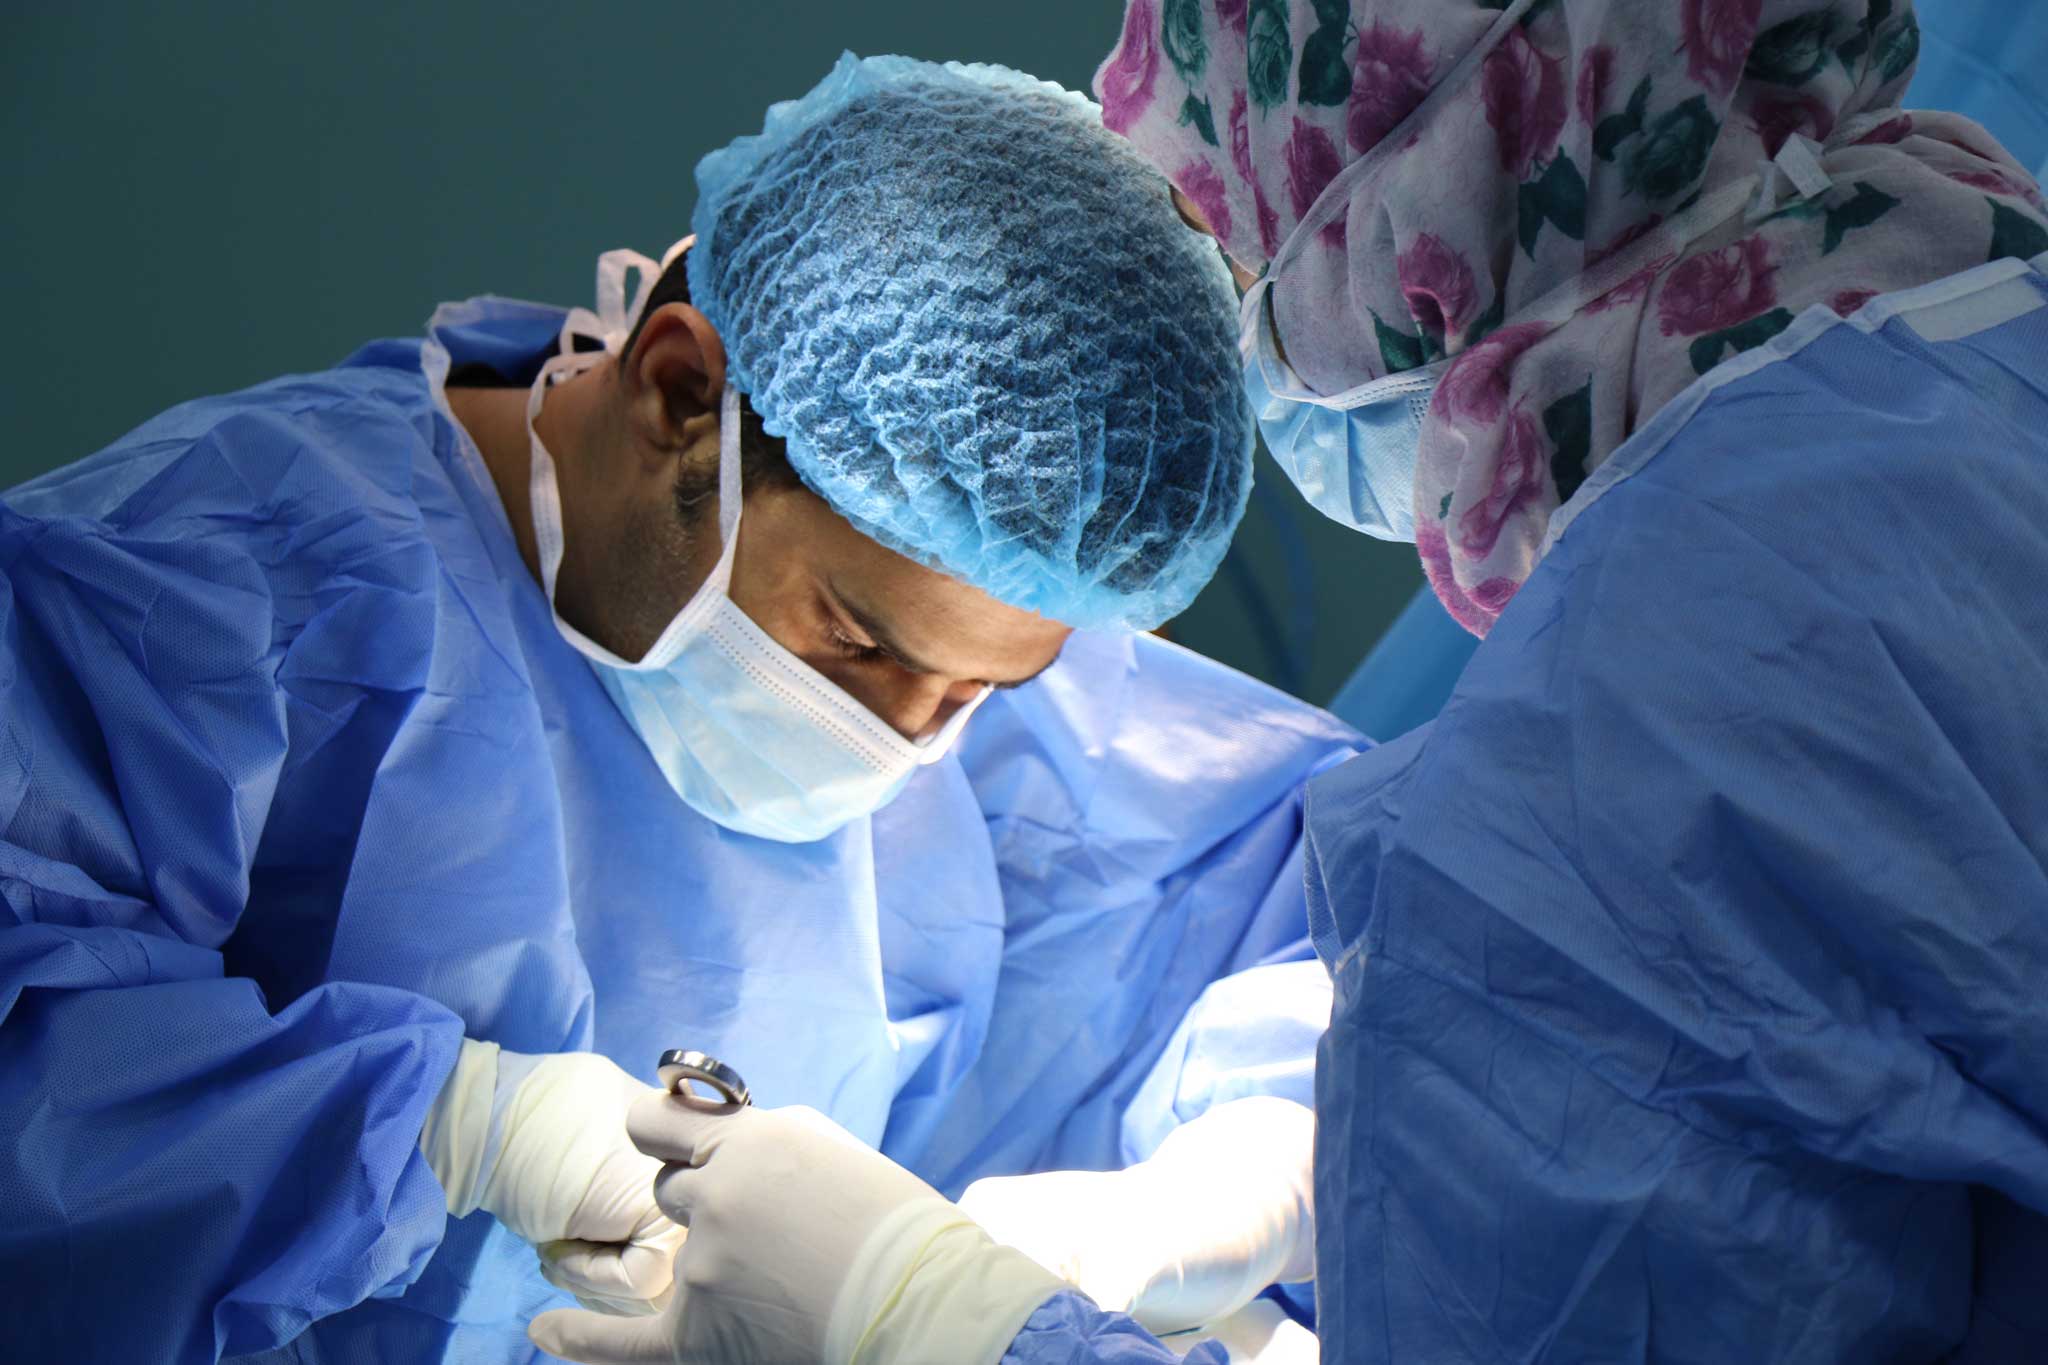 Medical surgery